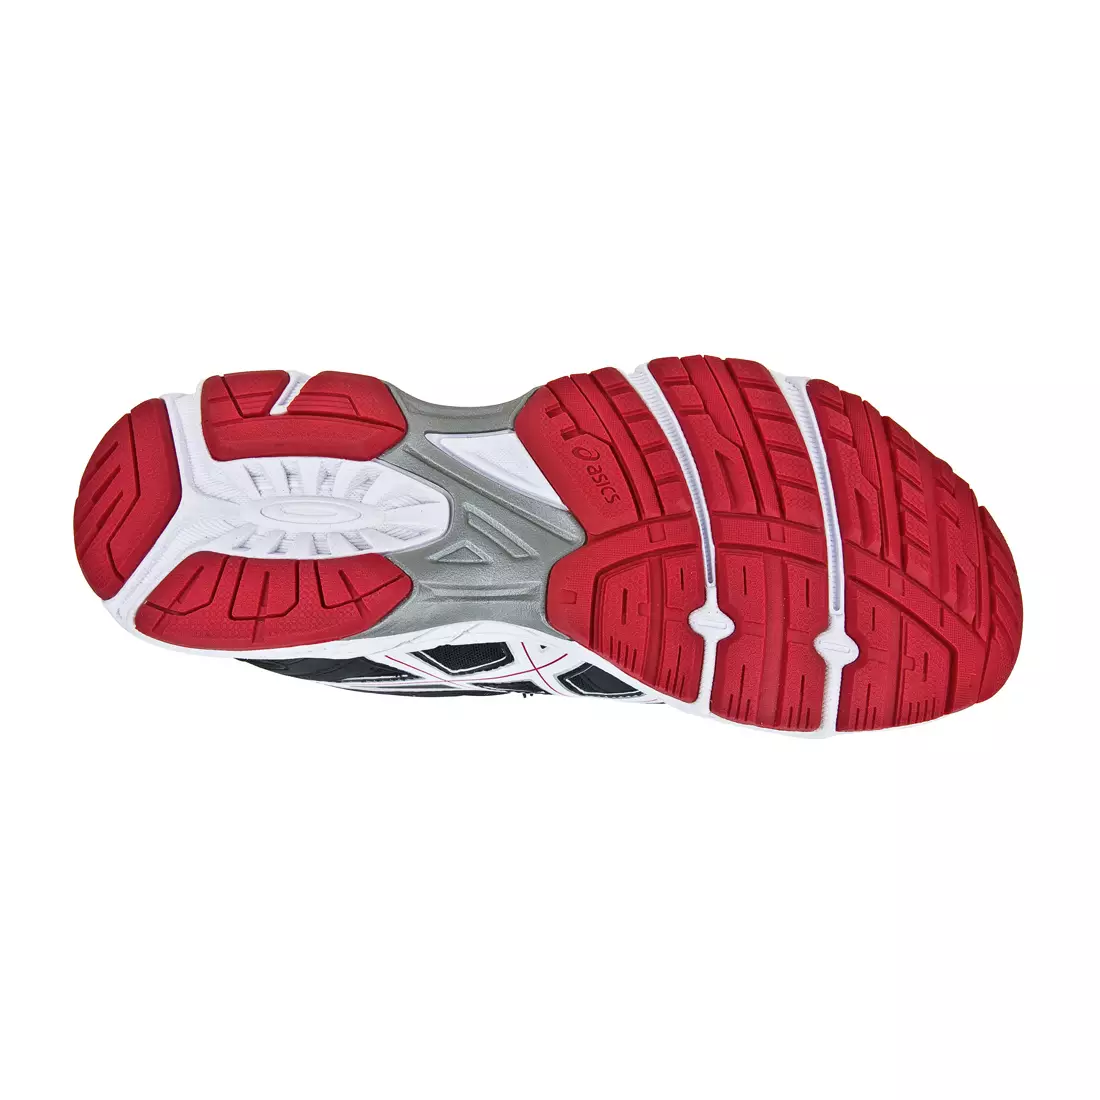 ASICS GEL EMPEROR - běžecké boty 9001, barva: Černá